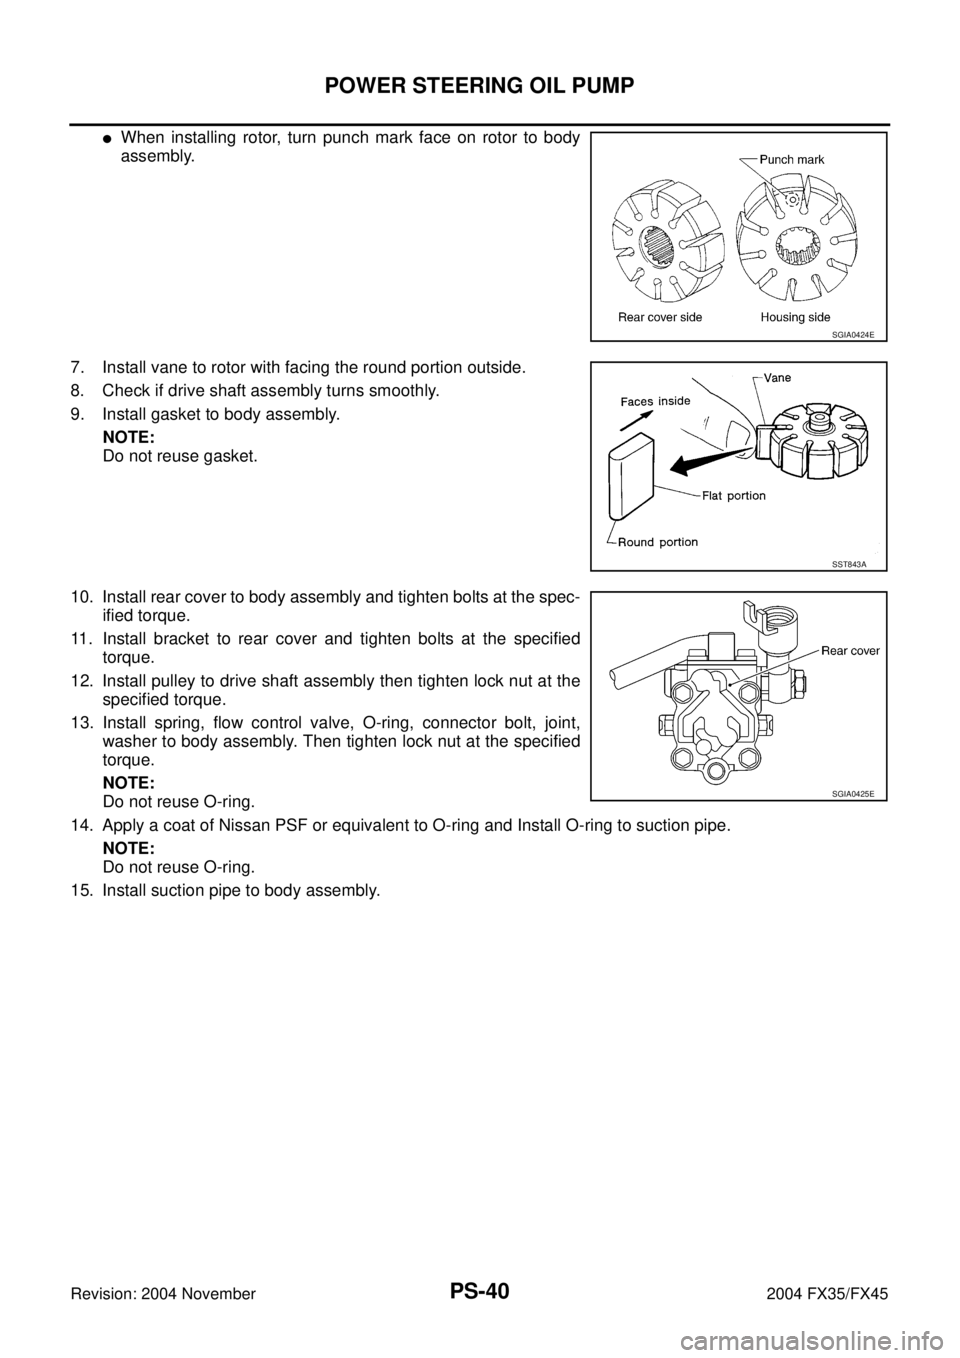 INFINITI FX35 2004  Service Manual PS-40
POWER STEERING OIL PUMP
Revision: 2004 November 2004 FX35/FX45
When installing rotor, turn punch mark face on rotor to body
assembly.
7. Install vane to rotor with facing the round portion outs